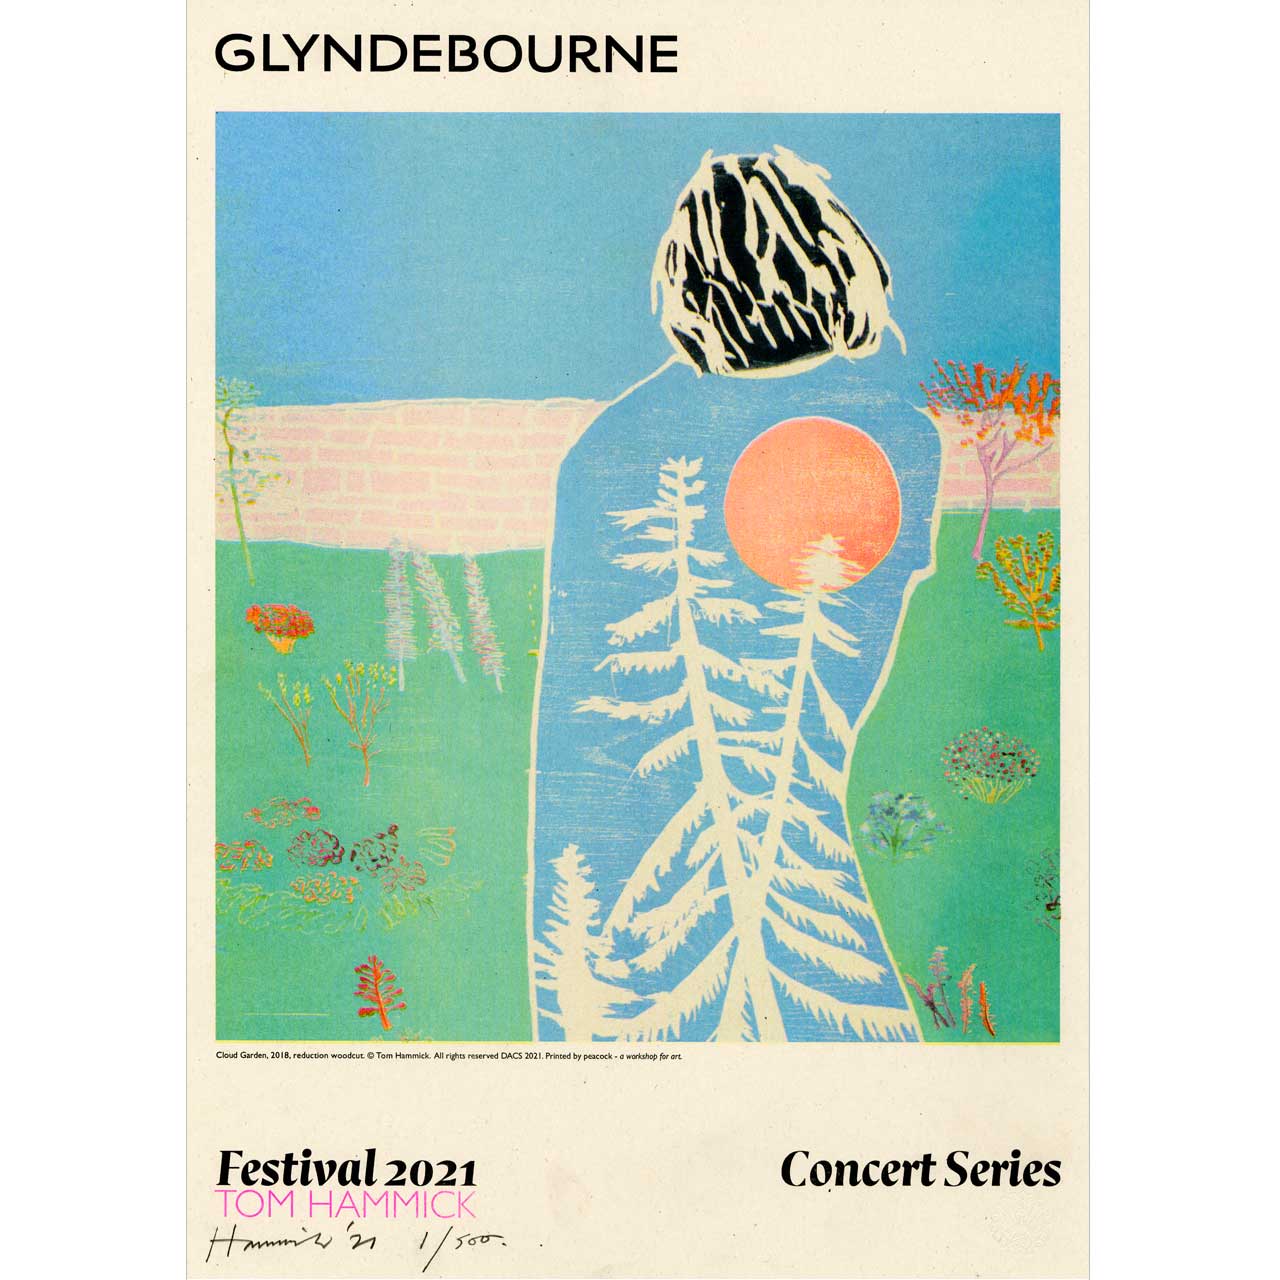 Concert Series Limited Edition Signed Poster by Tom Hammick Glyndebourne Shop